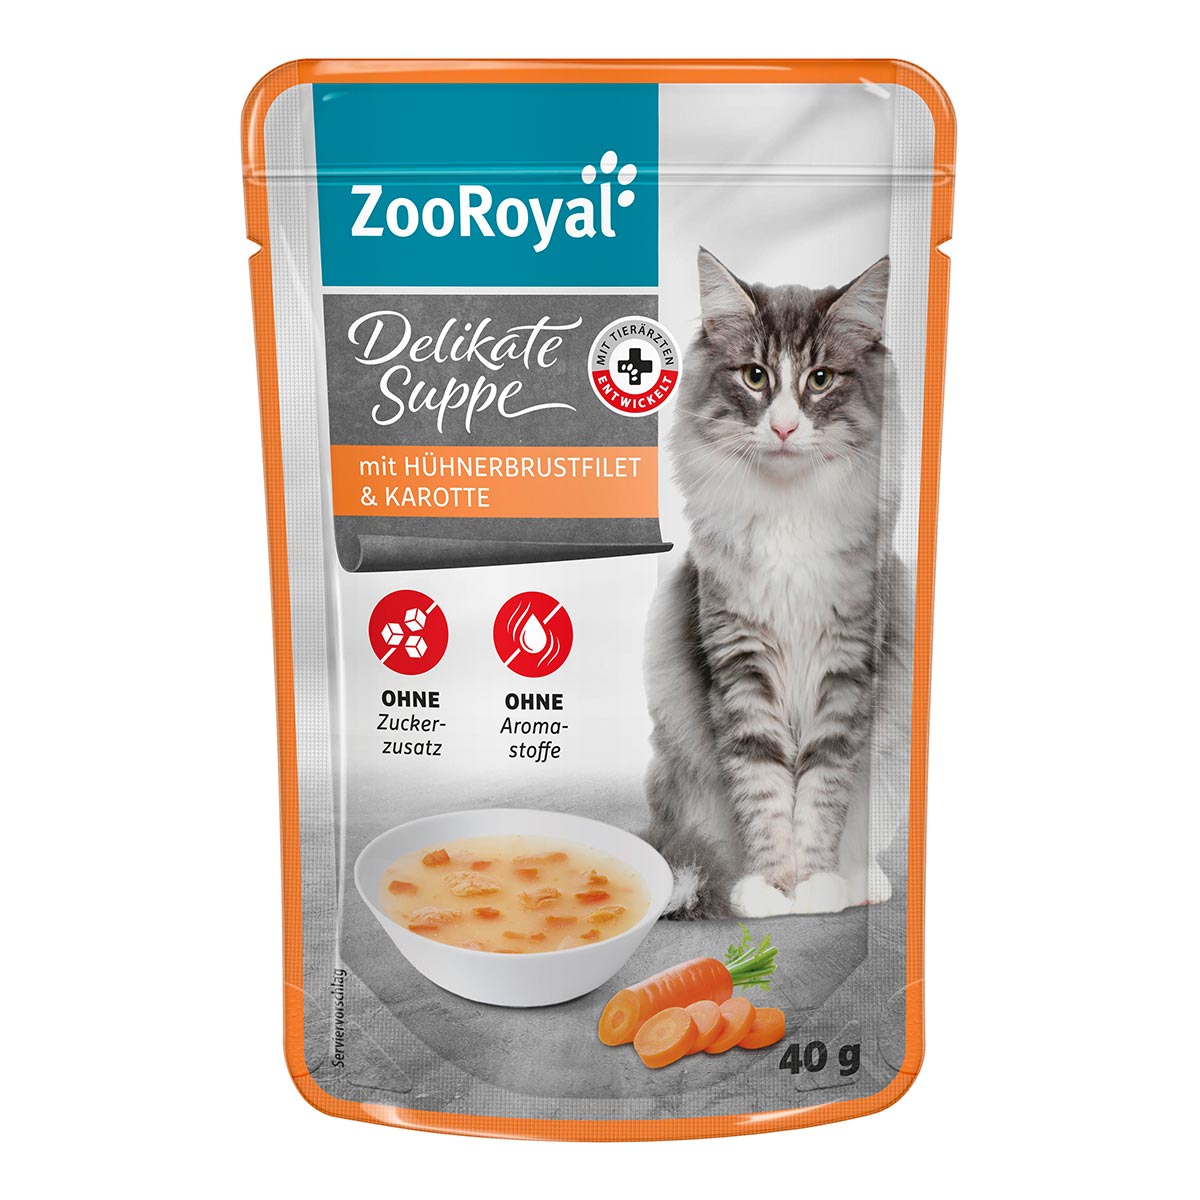 ZooRoyal Delikate Suppe Hühnerbrustfilet und Karotte 32x40g